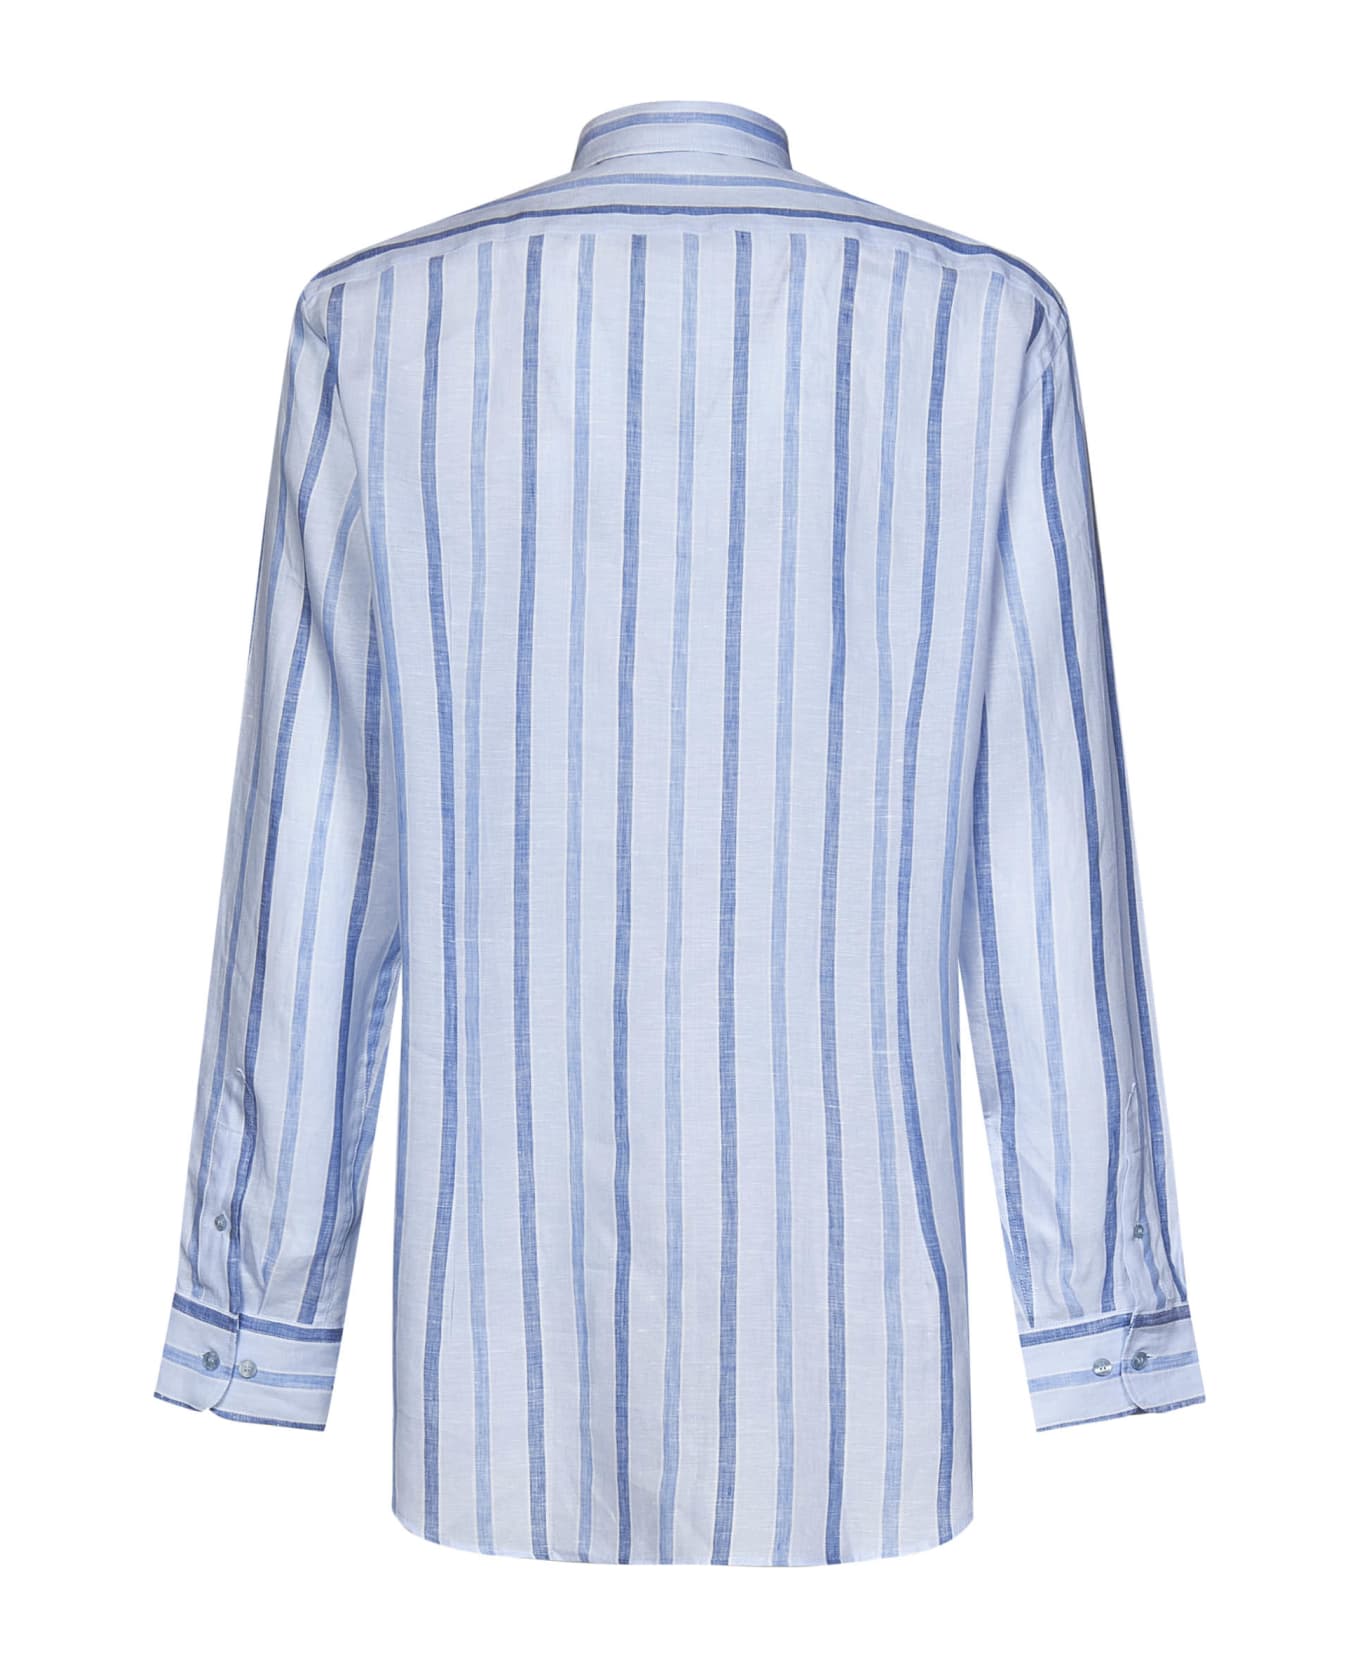 Etro Logo Embroidered Striped Shirt - Light blue